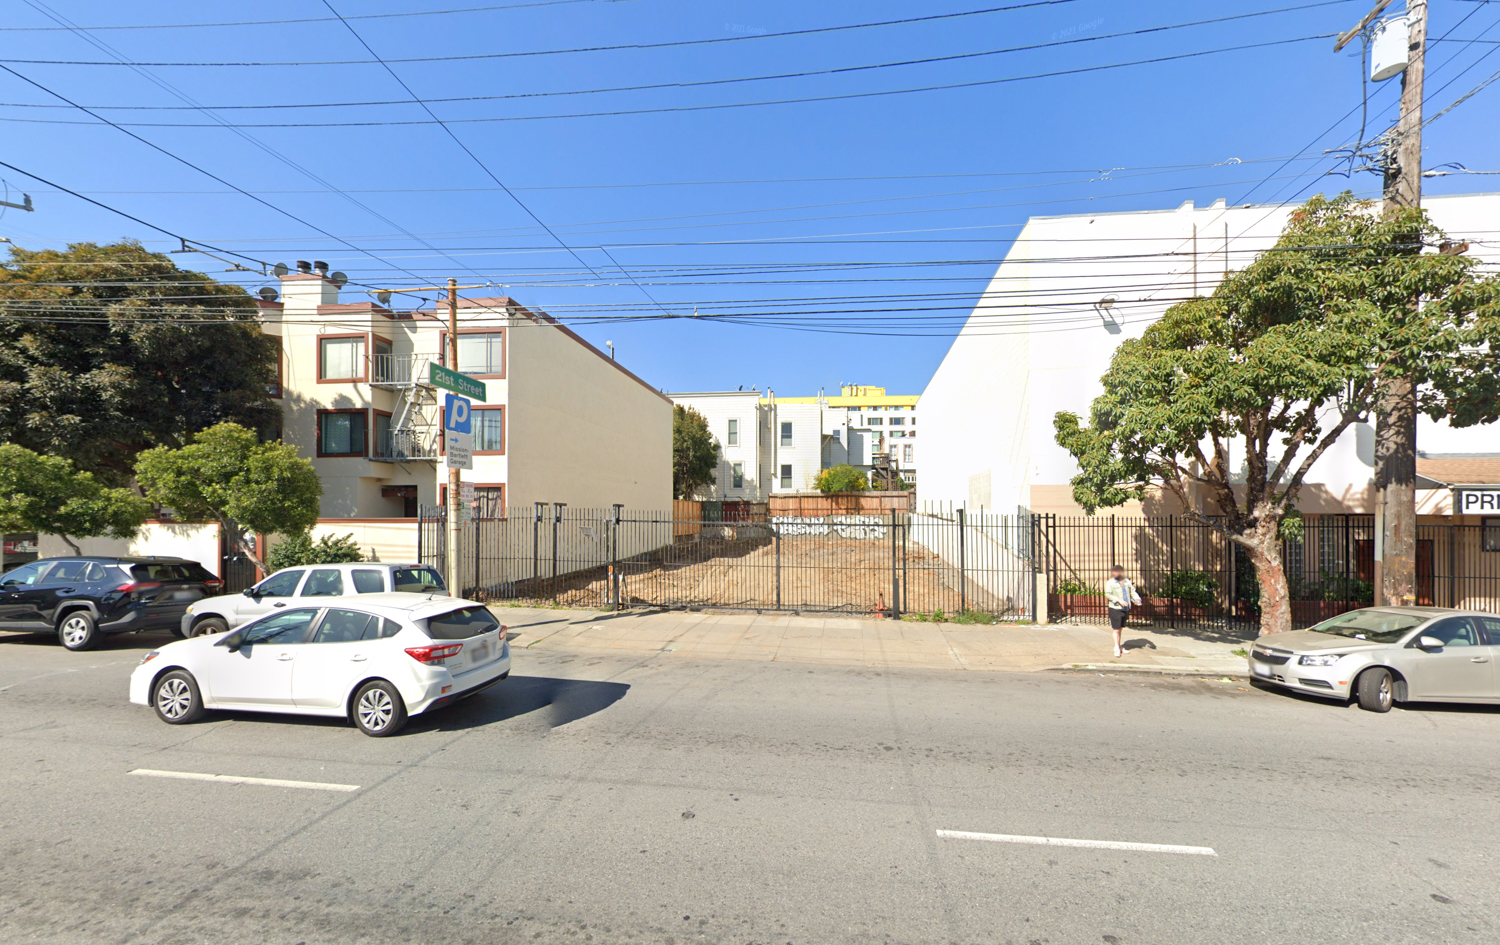 986 South Van Ness Avenue, image via Google Street View